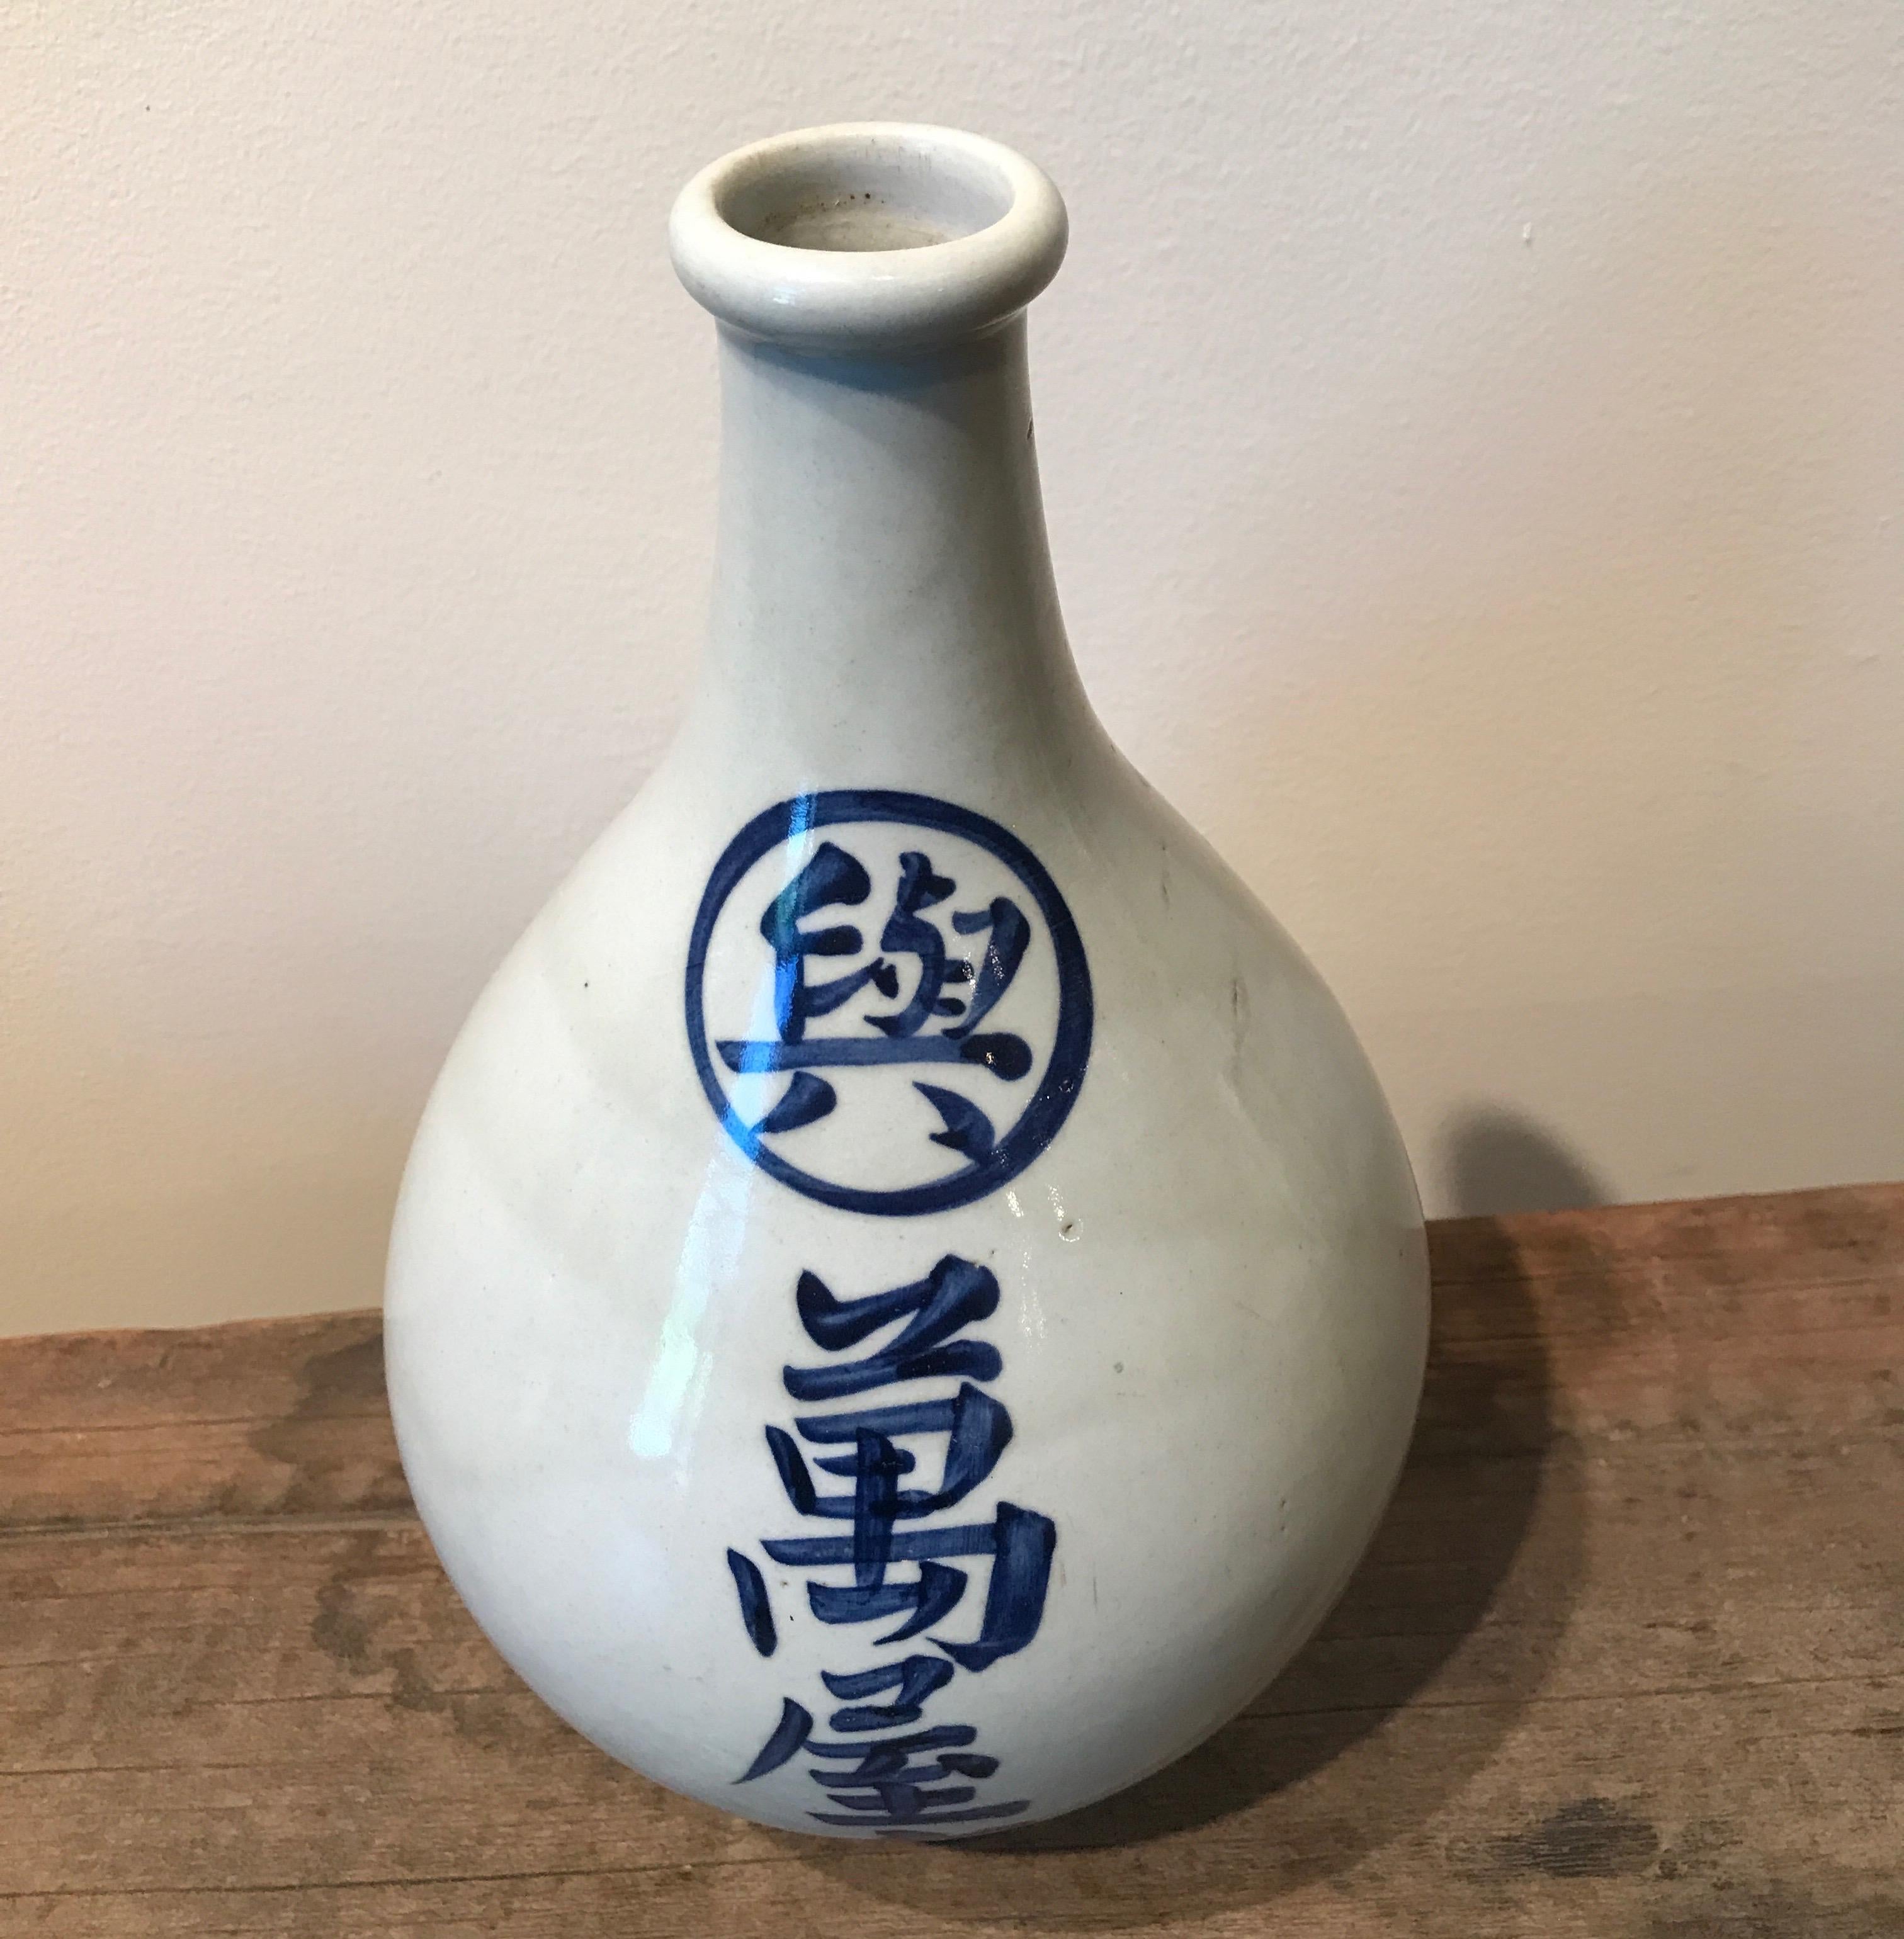 Ceramic Vintage Japanese Sake Bottle with Hand Painted Calligraphy